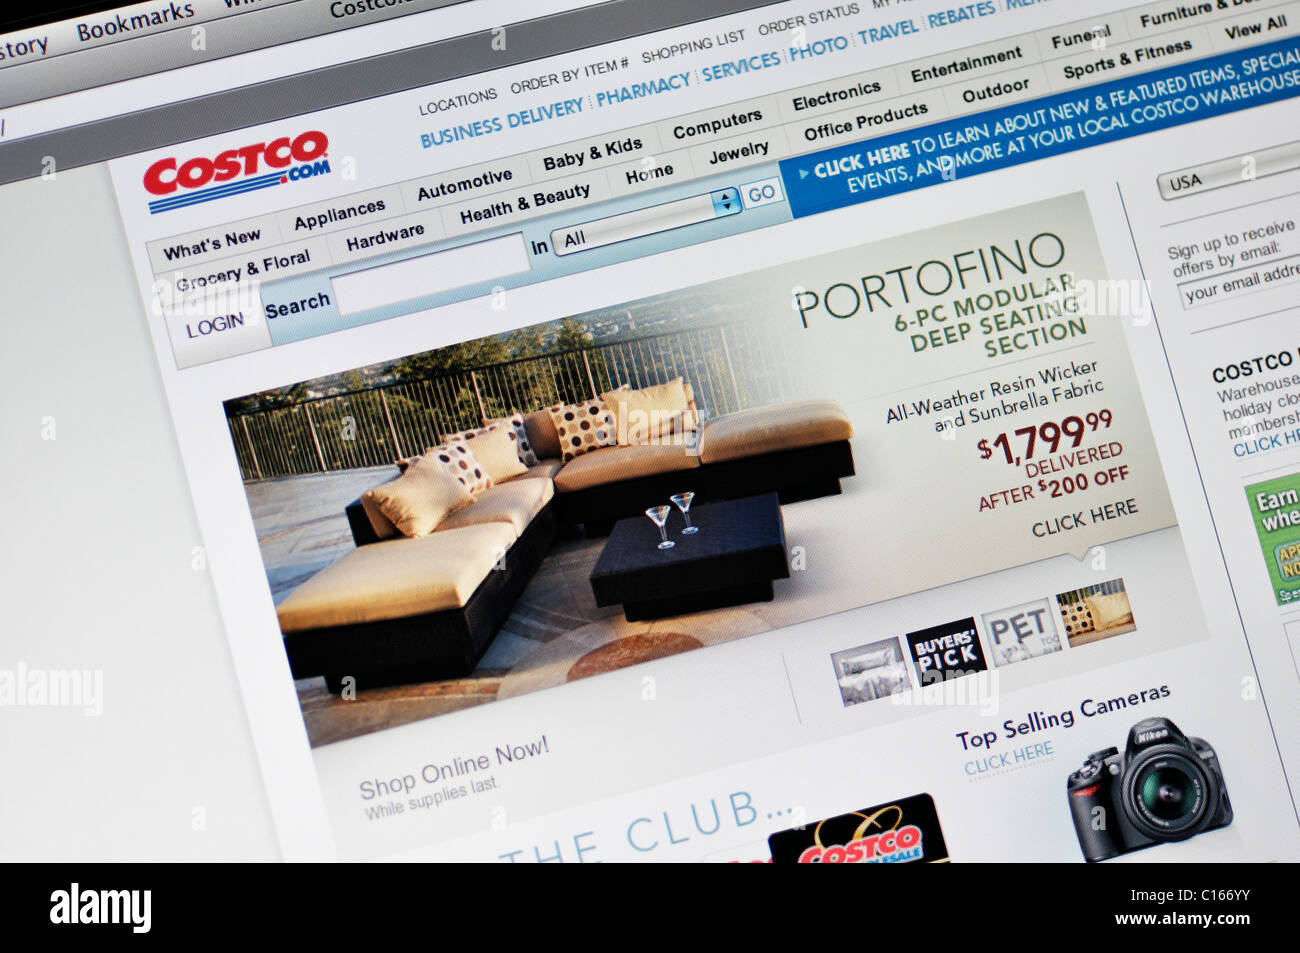 Costco wholesale shopping website Stock Photo